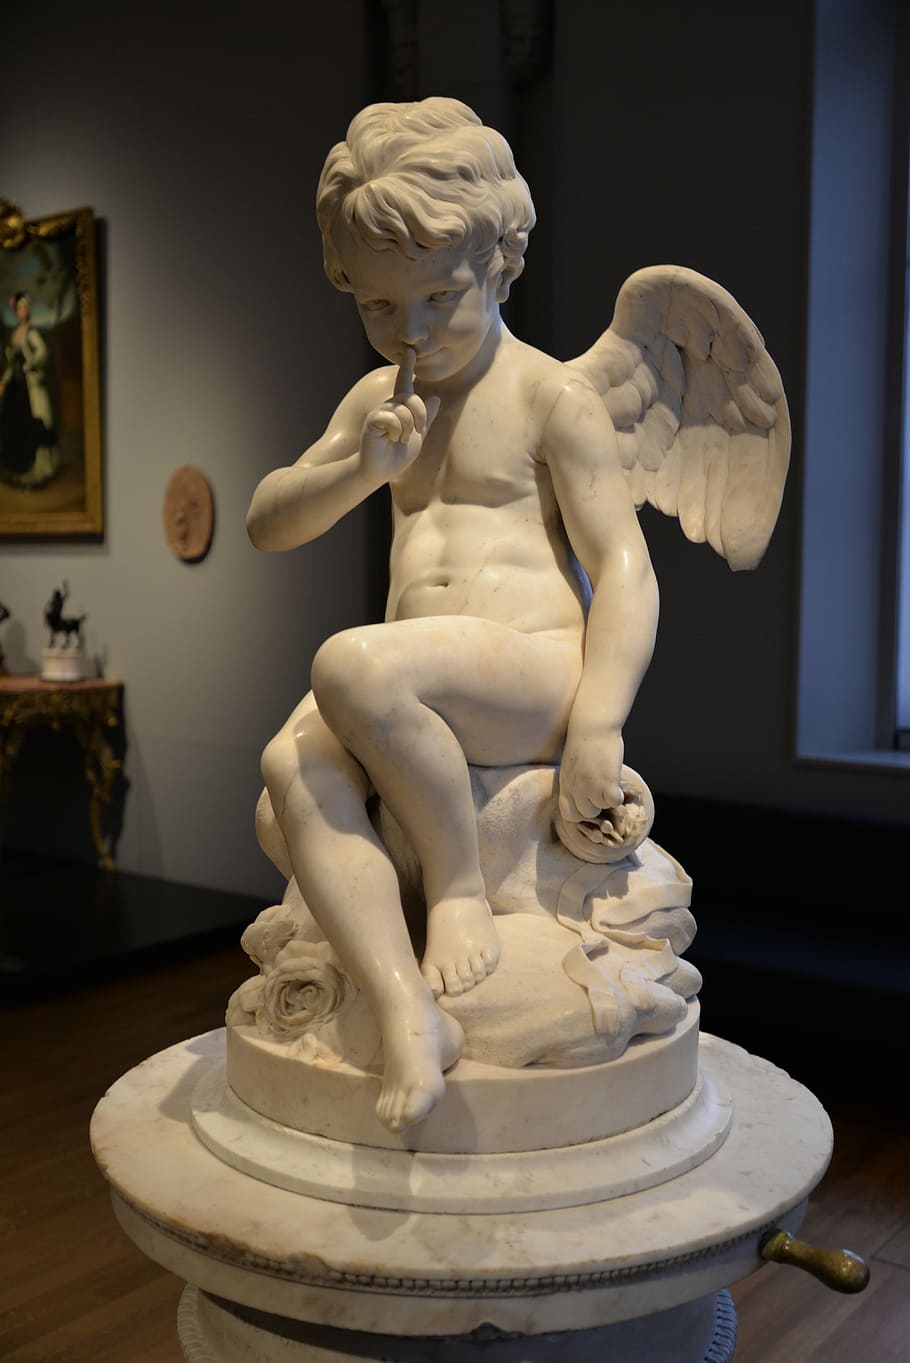 cherub wood, carved, display figure photography, angel, sculpture, silence, marble, museum, rijksmuseum, seated cupid